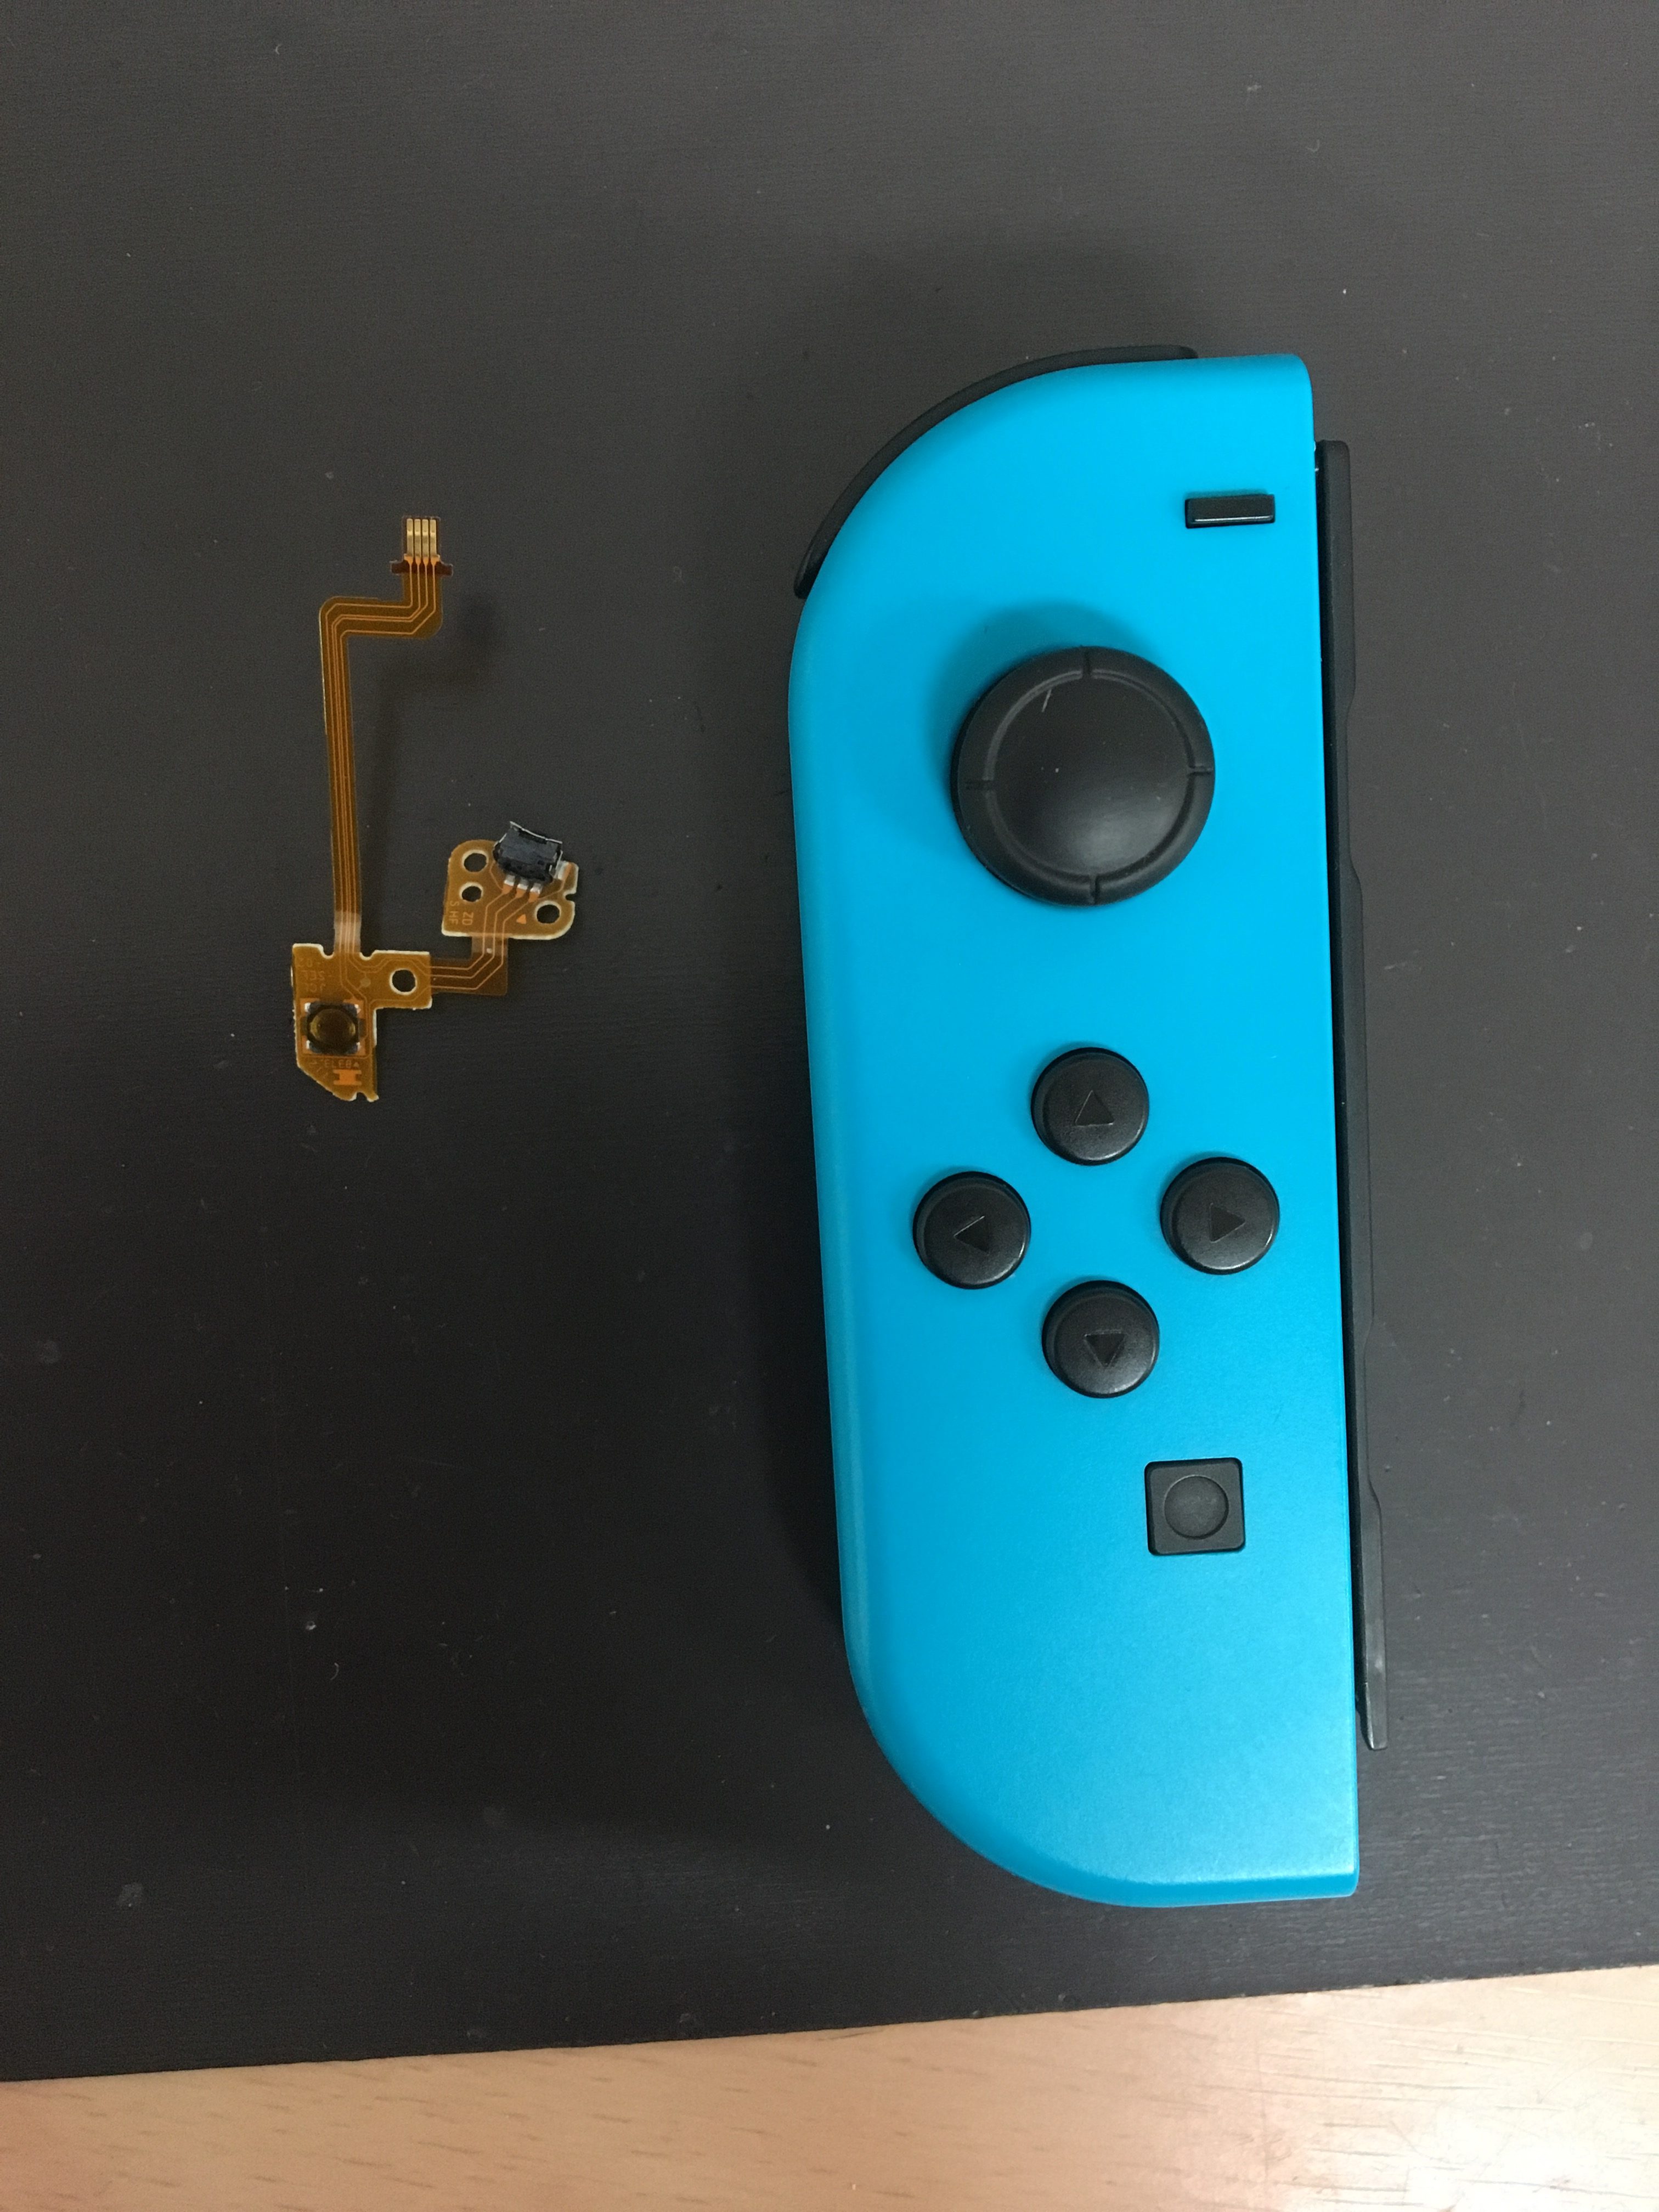 Switchジョイコンlボタンケーブル交換修理承りました Nintendo3ds Switch Psp 修理のゲームホスピタル Nintendo3ds ニンテンドーds Psp 修理